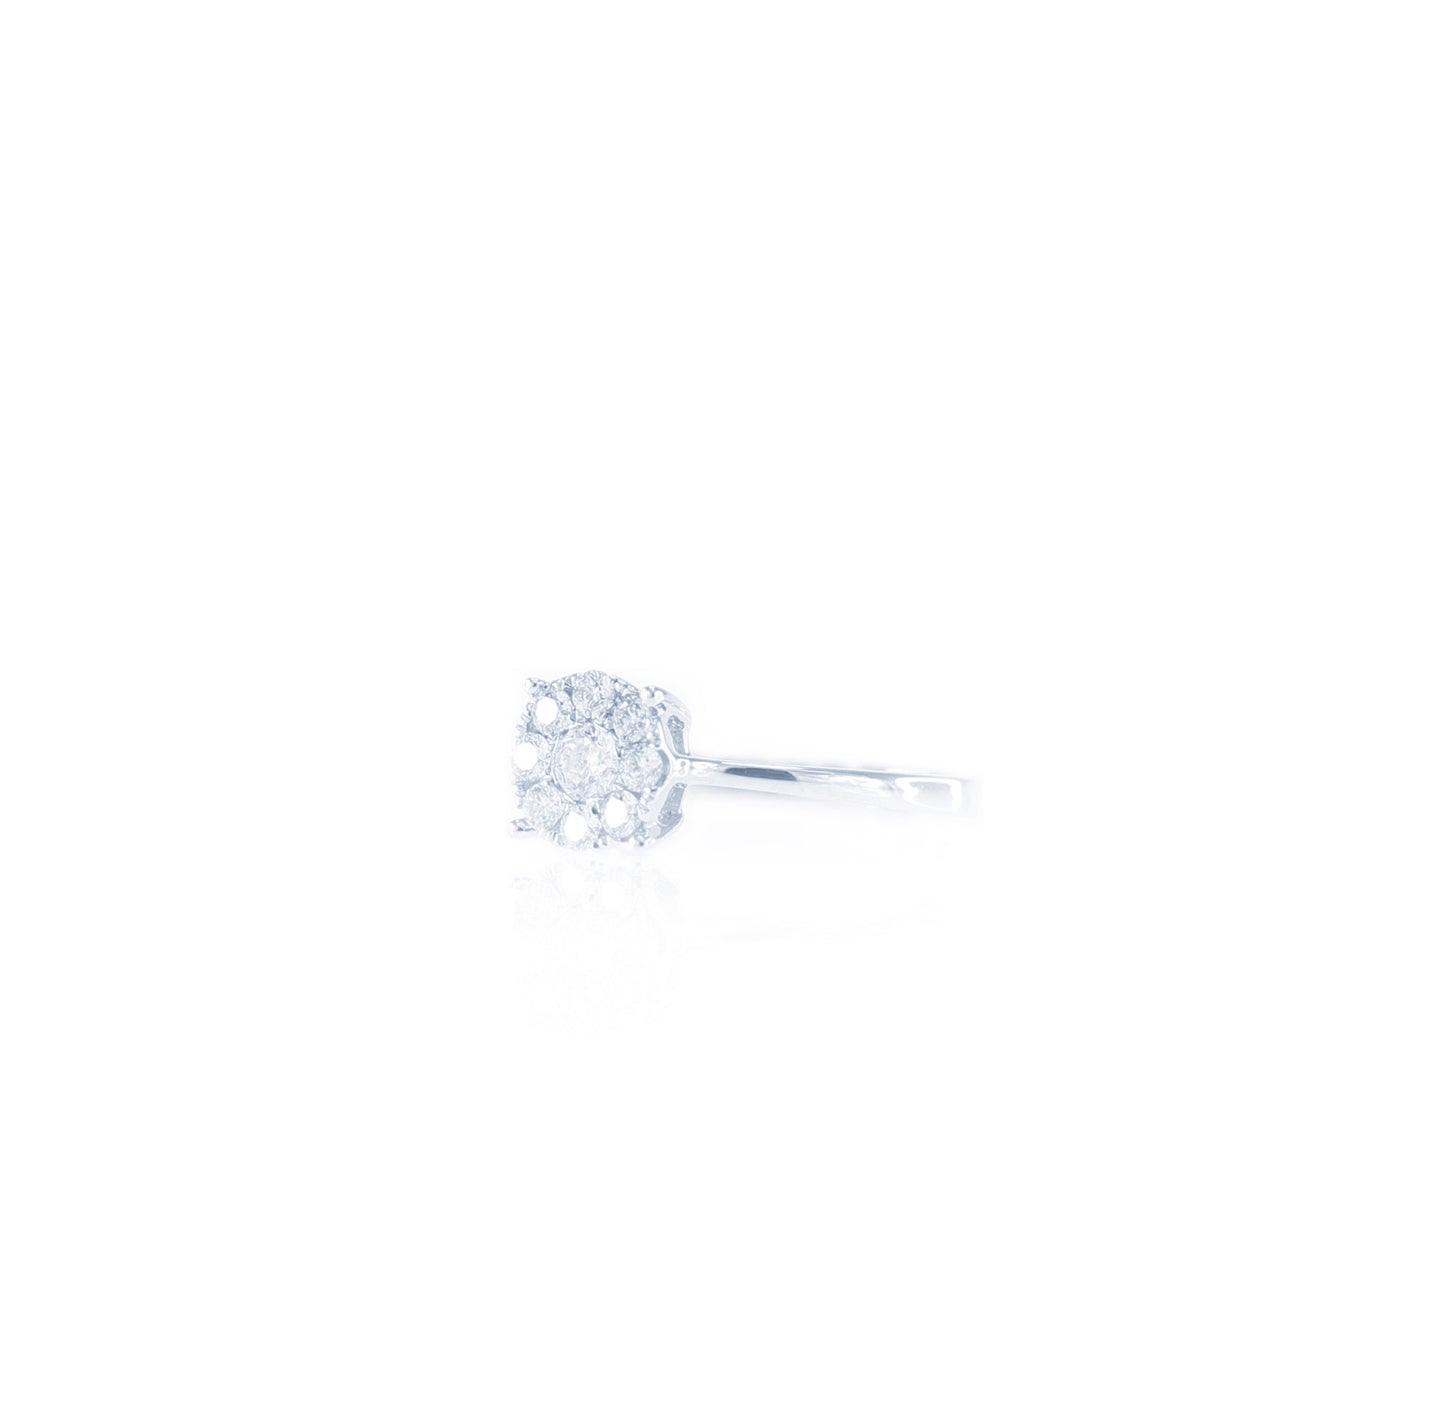 Stunning Composite Round Diamond Ring in 18K White Gold